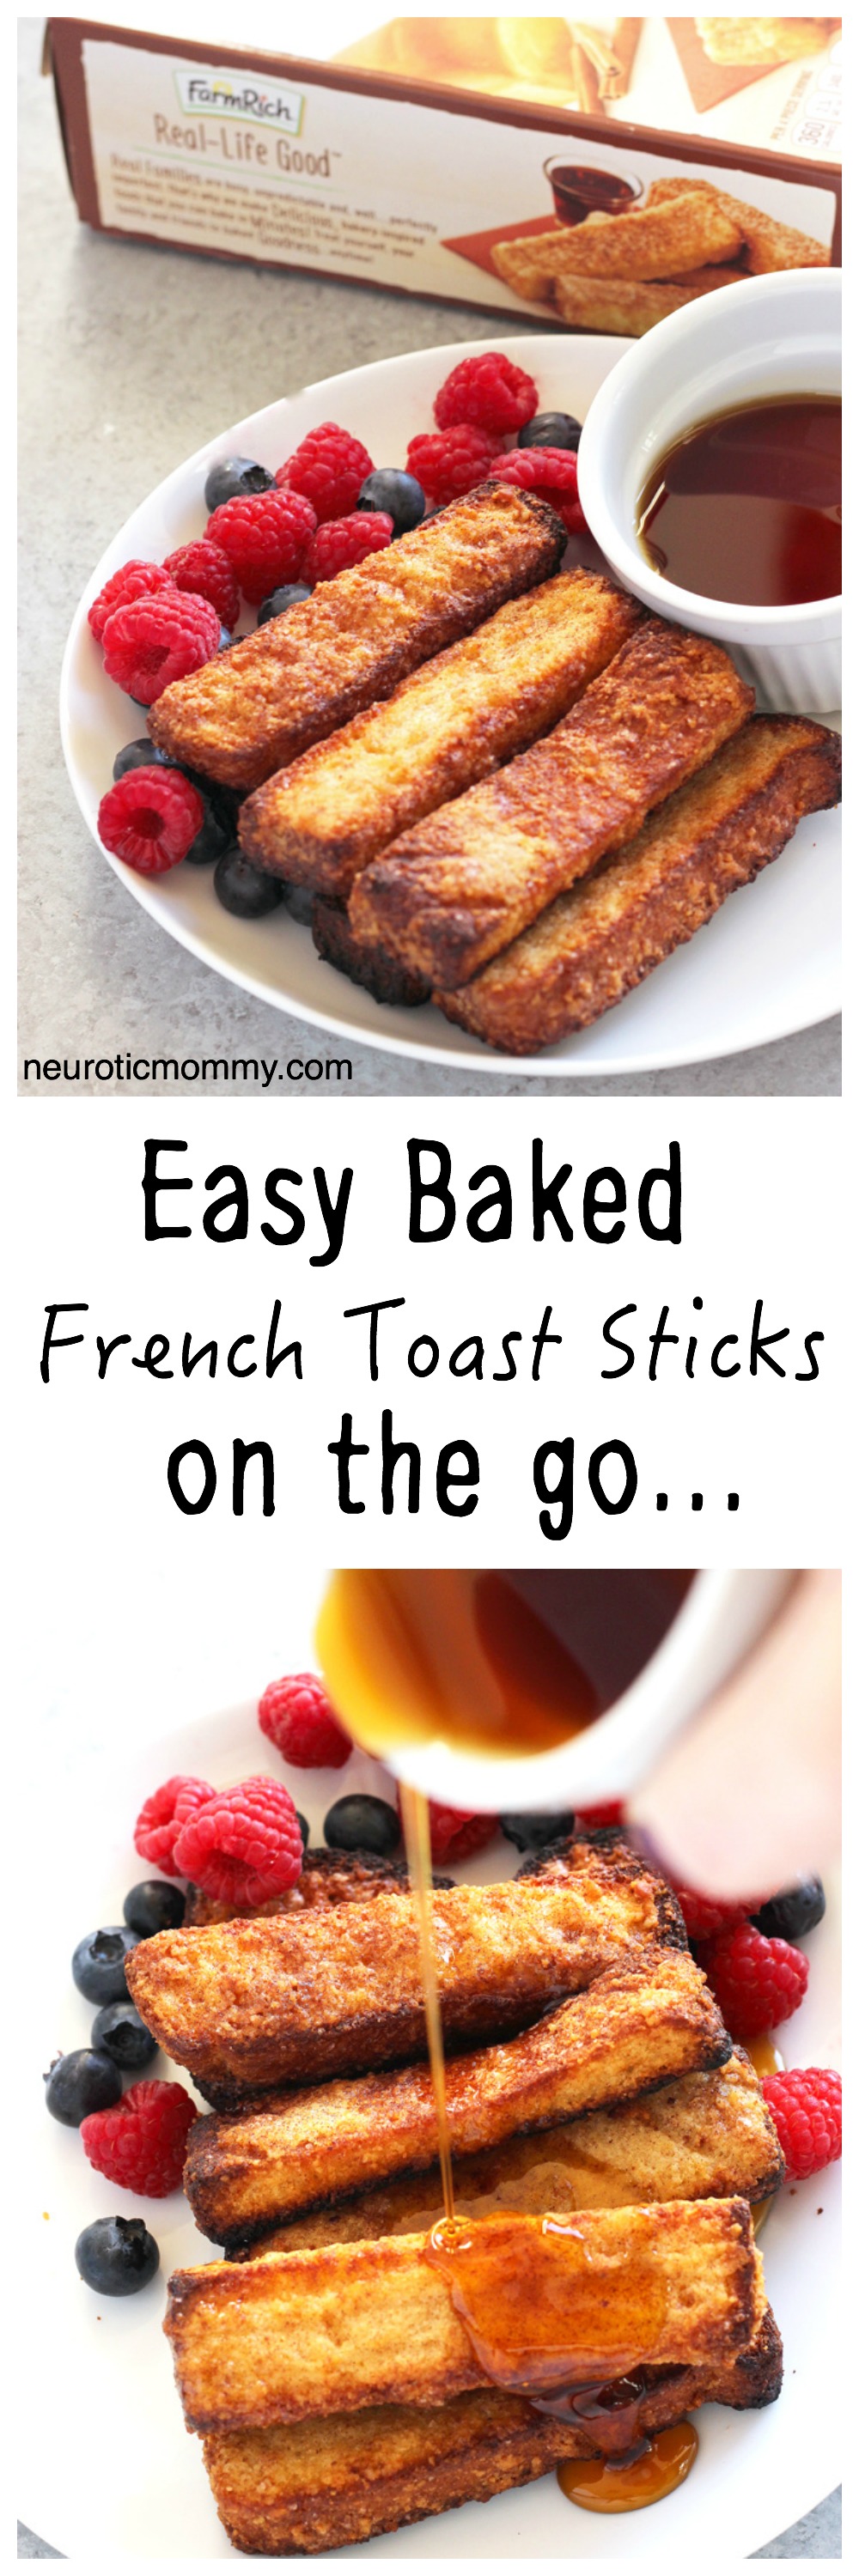 Easy Baked French Toast Sticks On the Go - Easy on the go breakfast for adults or kids! NeuroticMommy.com @FarmRichSnacks #FarmRichBakery #vegetarian #breakfast